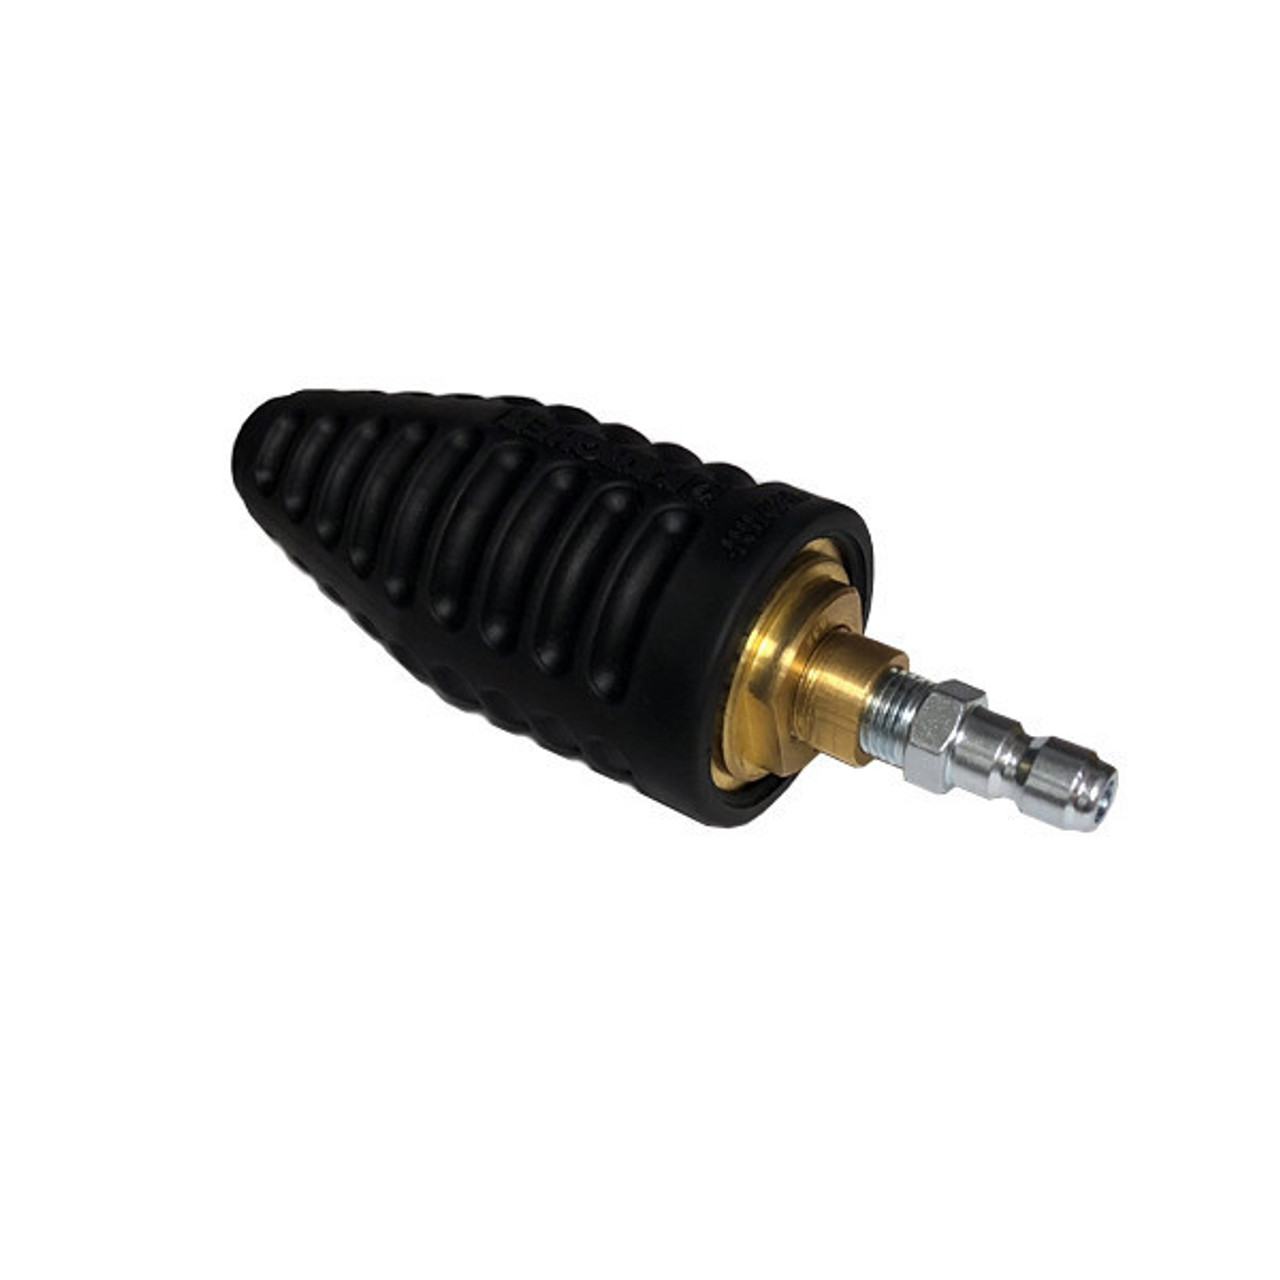 Kärcher - 4350 PSI Dirt Blaster Rotary Turbo Nozzle w/ Quick Coupler Plug